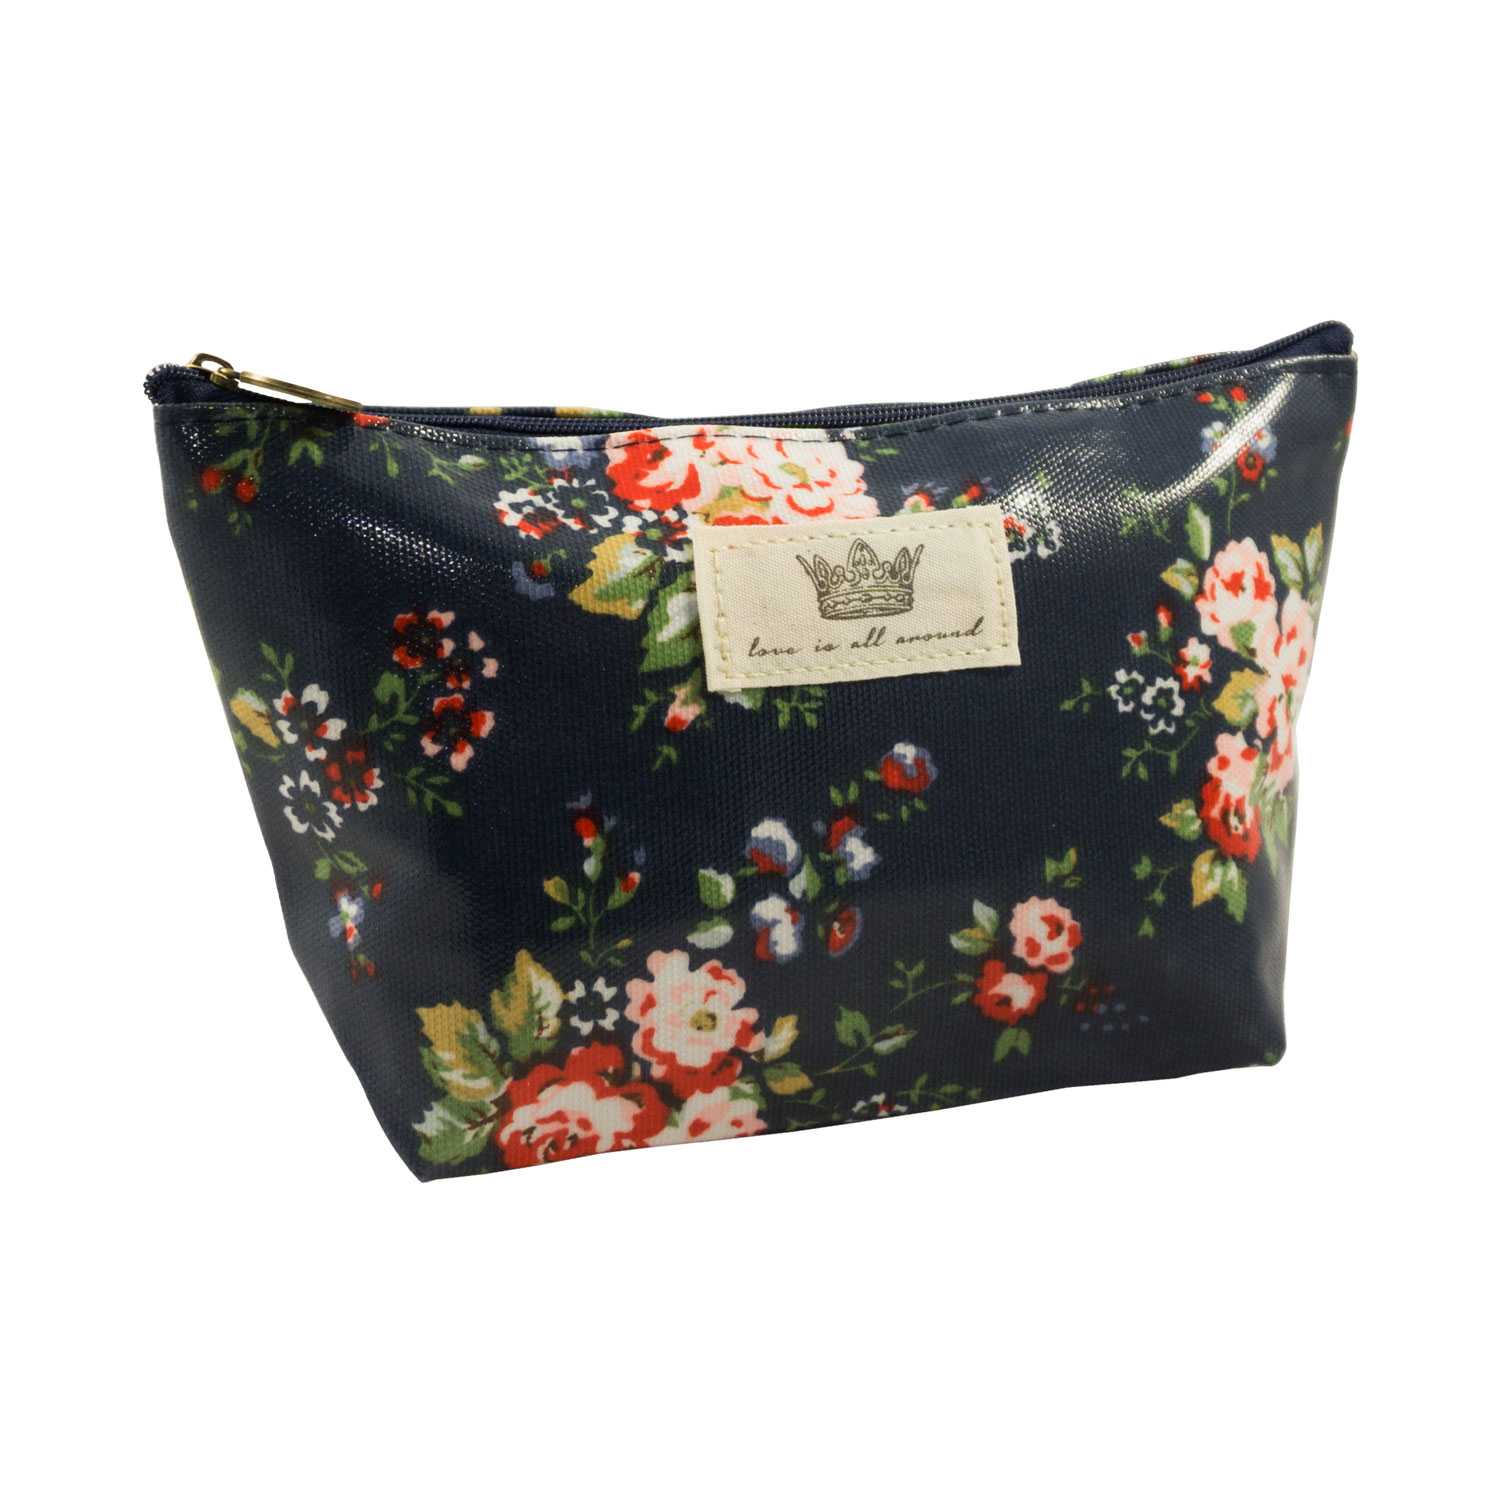 Classic Flower Pattern Cosmetic Pouch Bag - Navy - Zestique